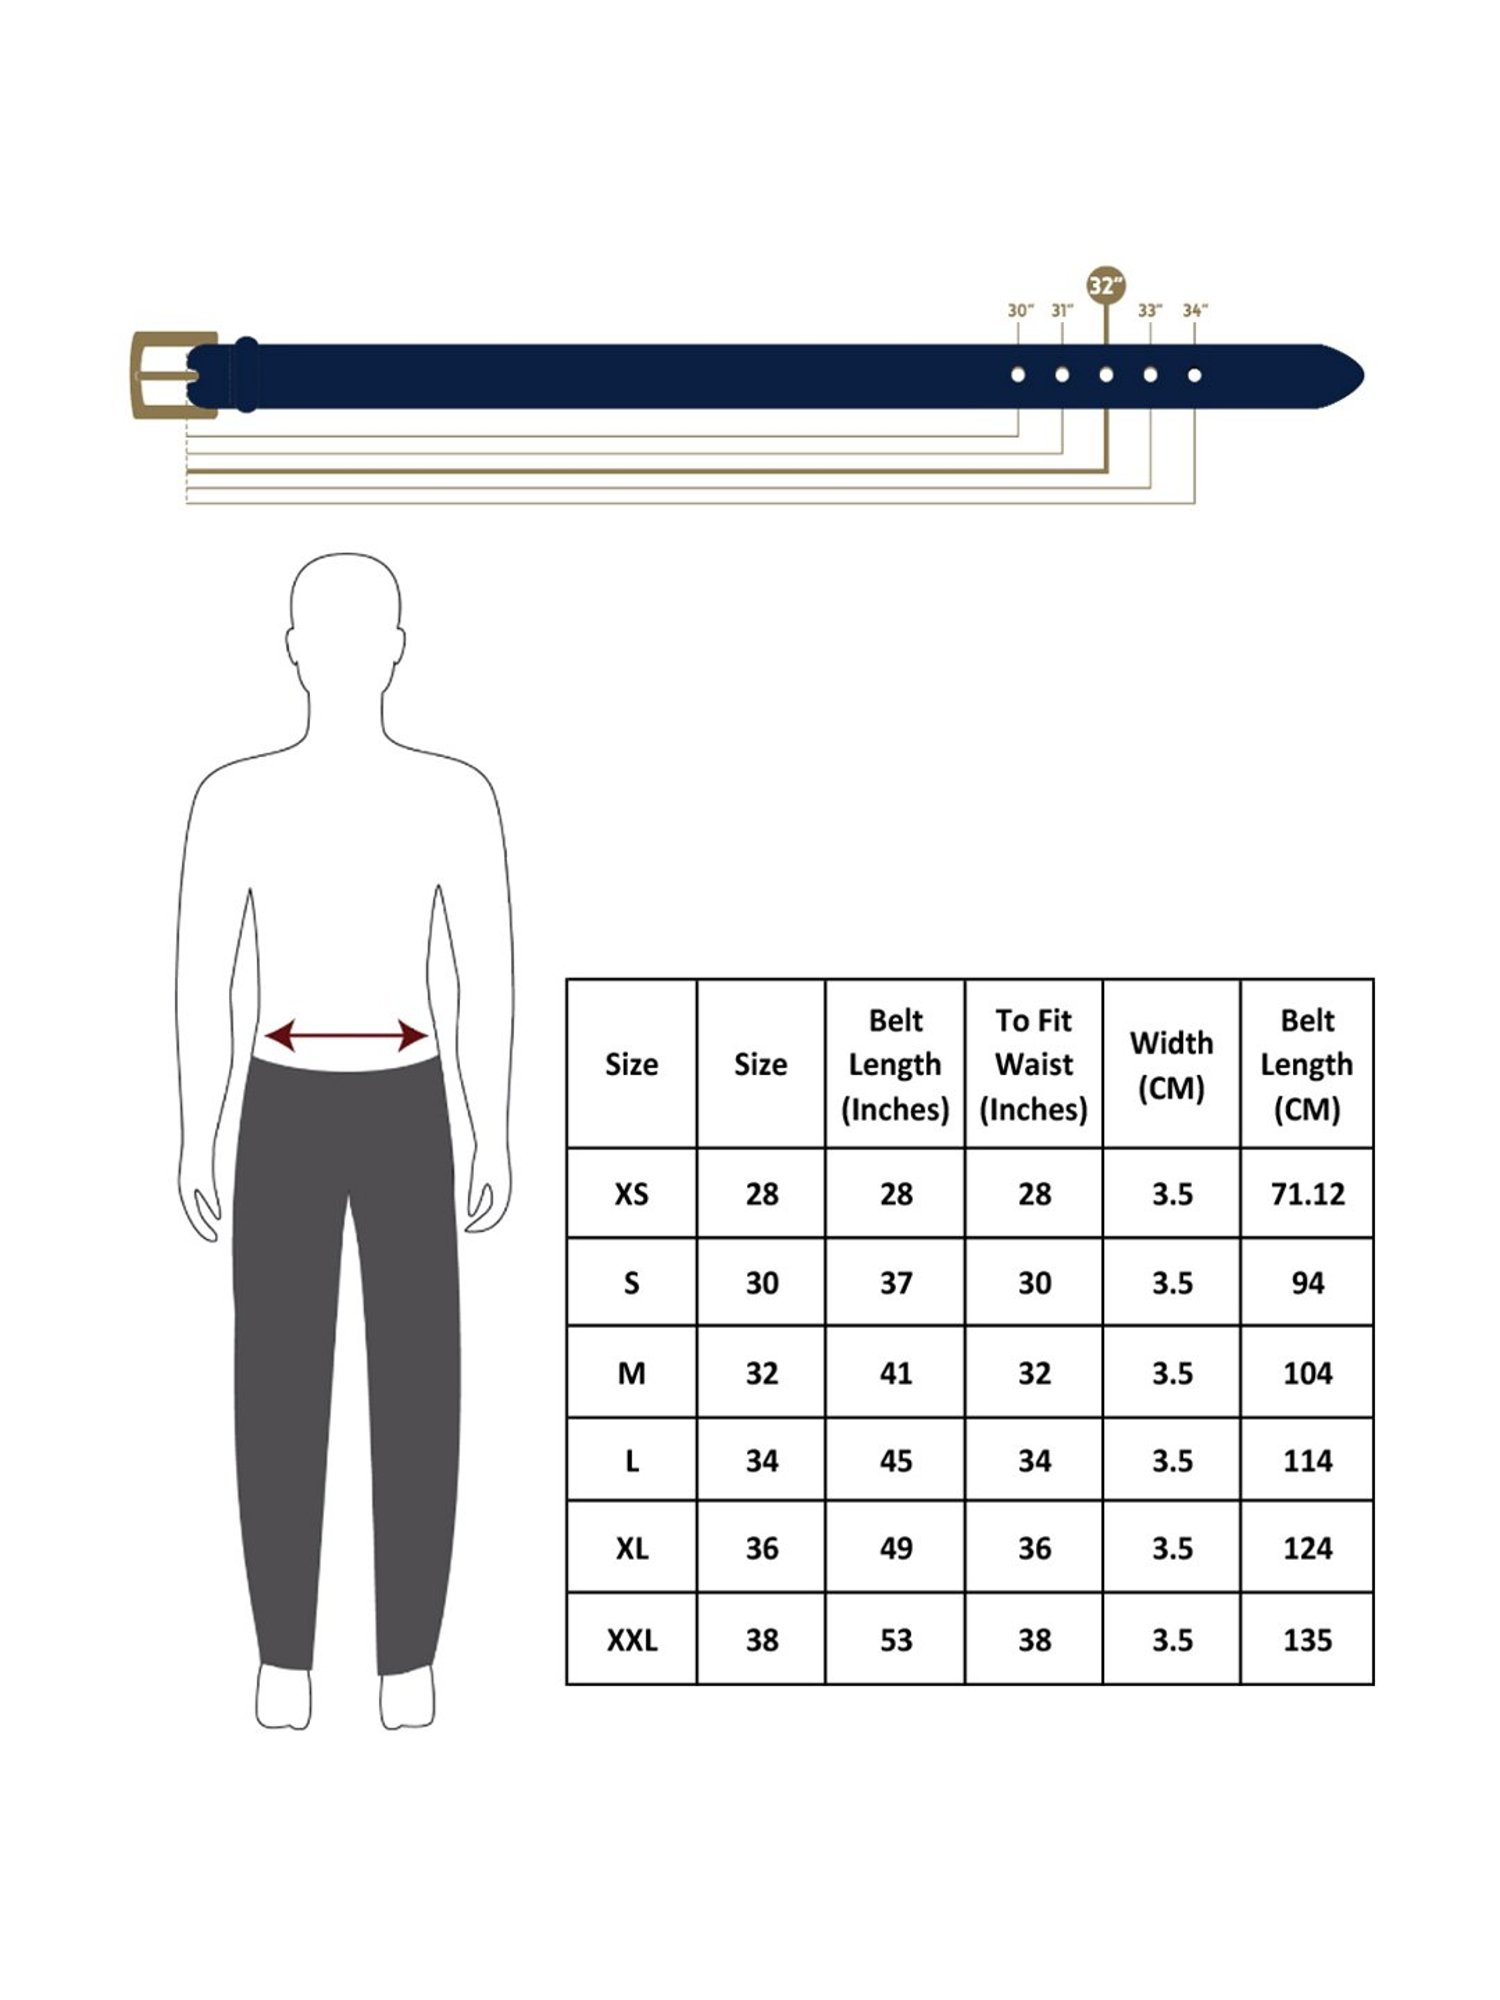 Buy Louis Philippe Black Textured Reversible Belt for Men at Best Price @  Tata CLiQ